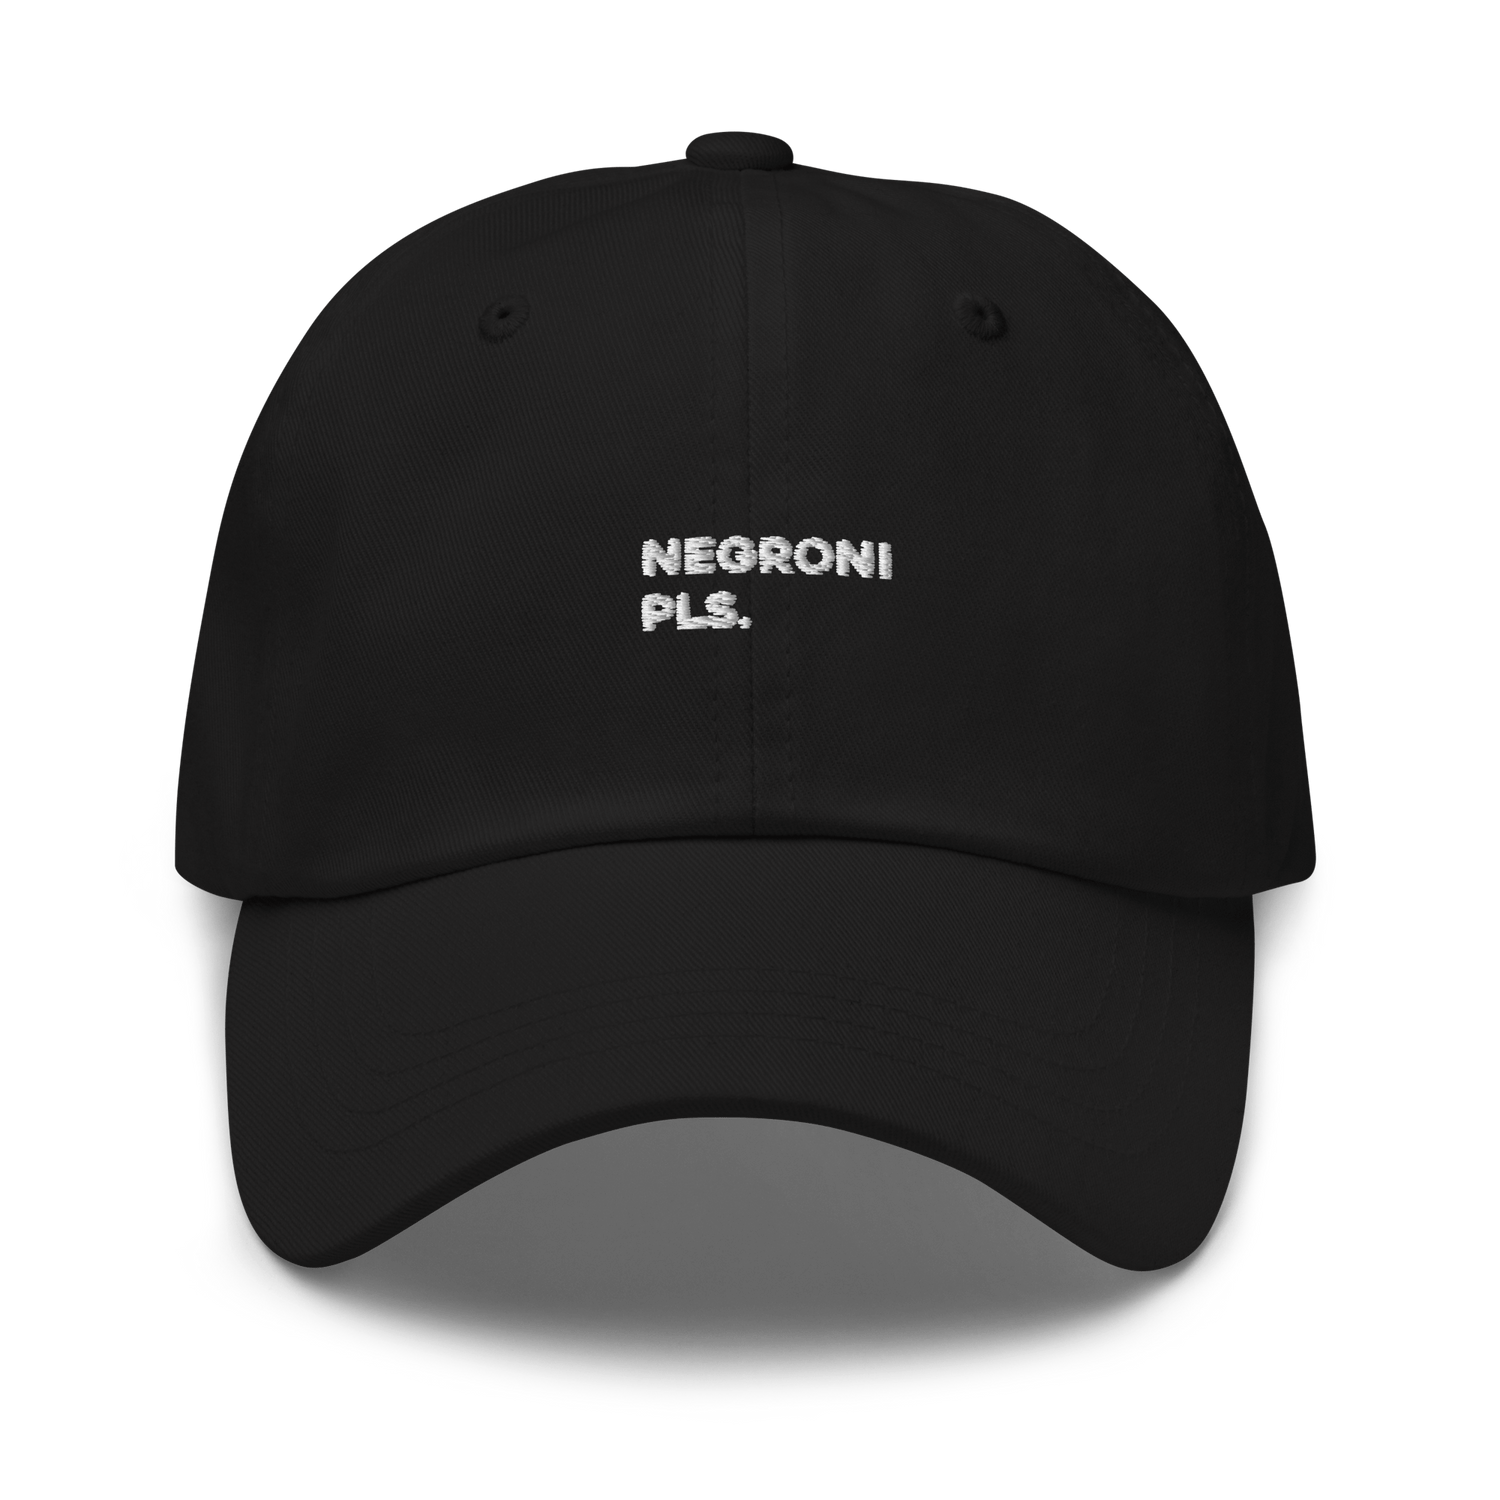 The Negroni Pls. Dad hat